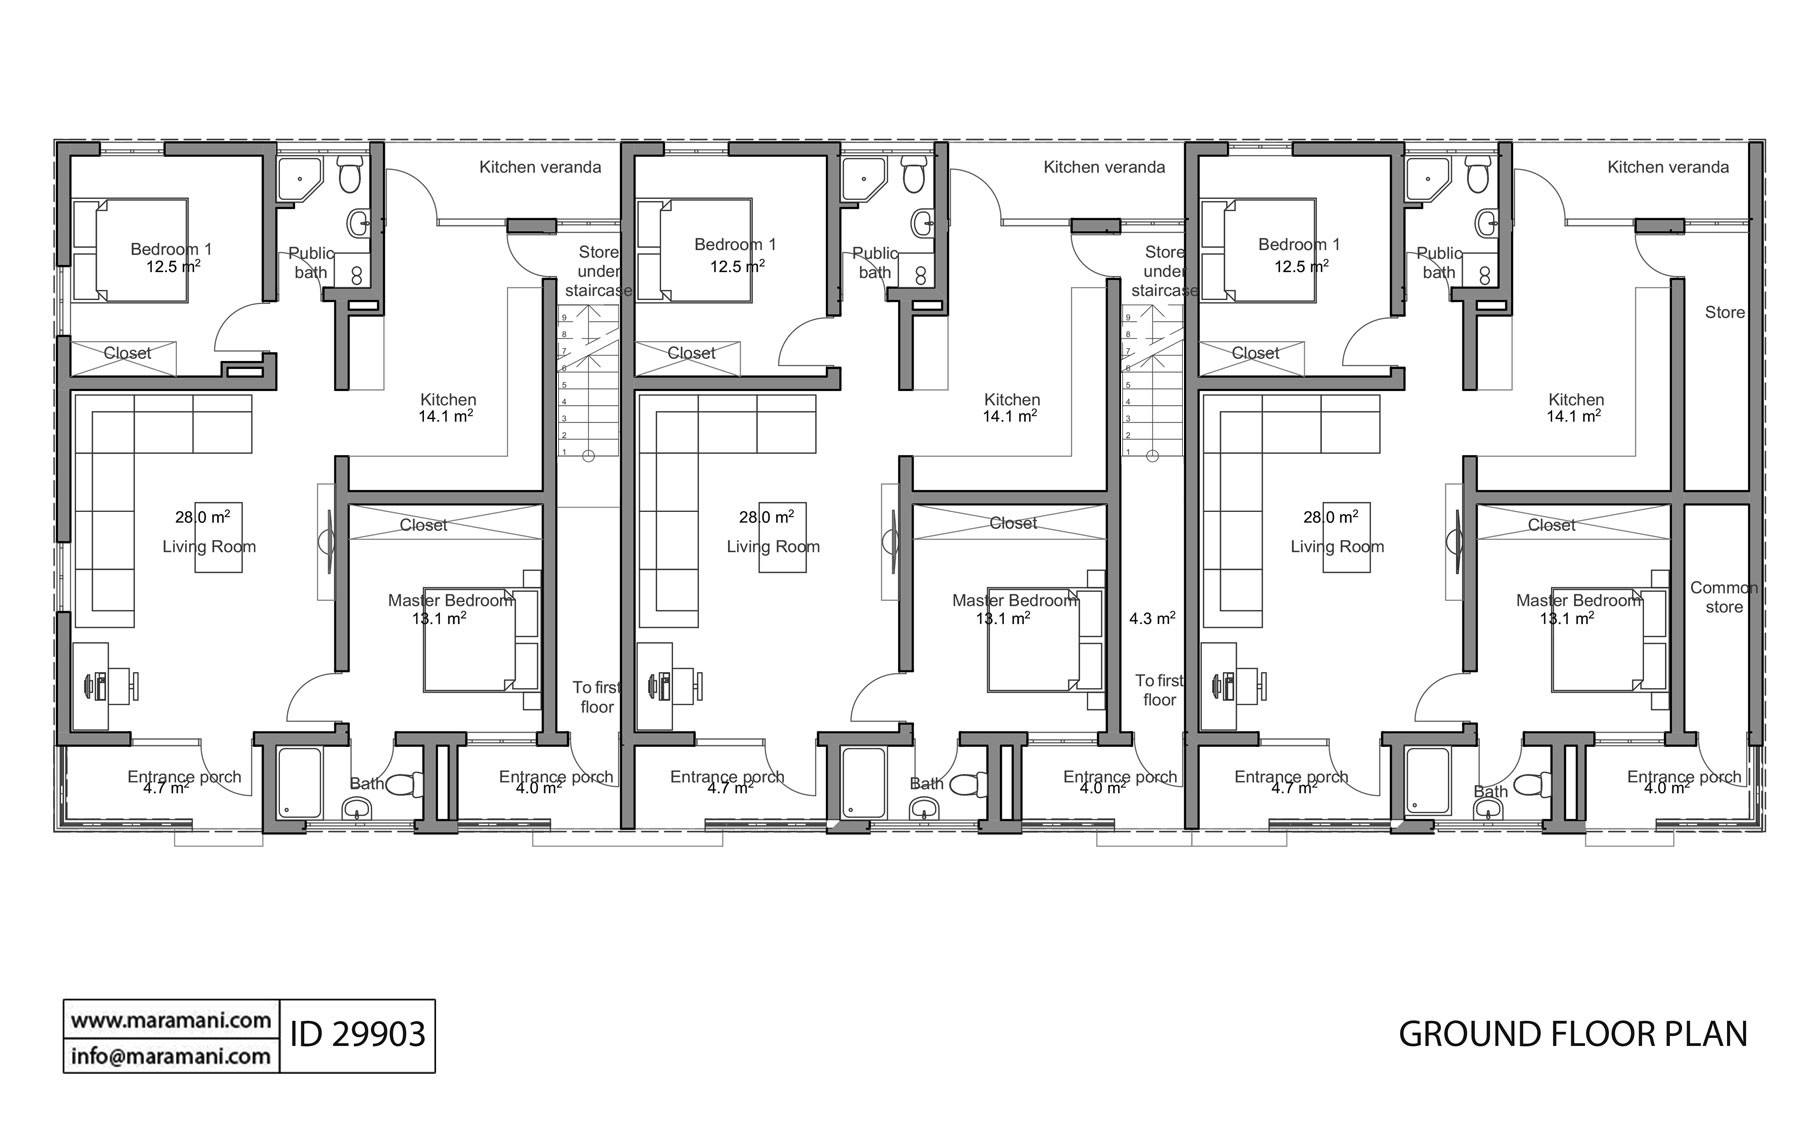 Apartment Building Floor Plan - ID 29903